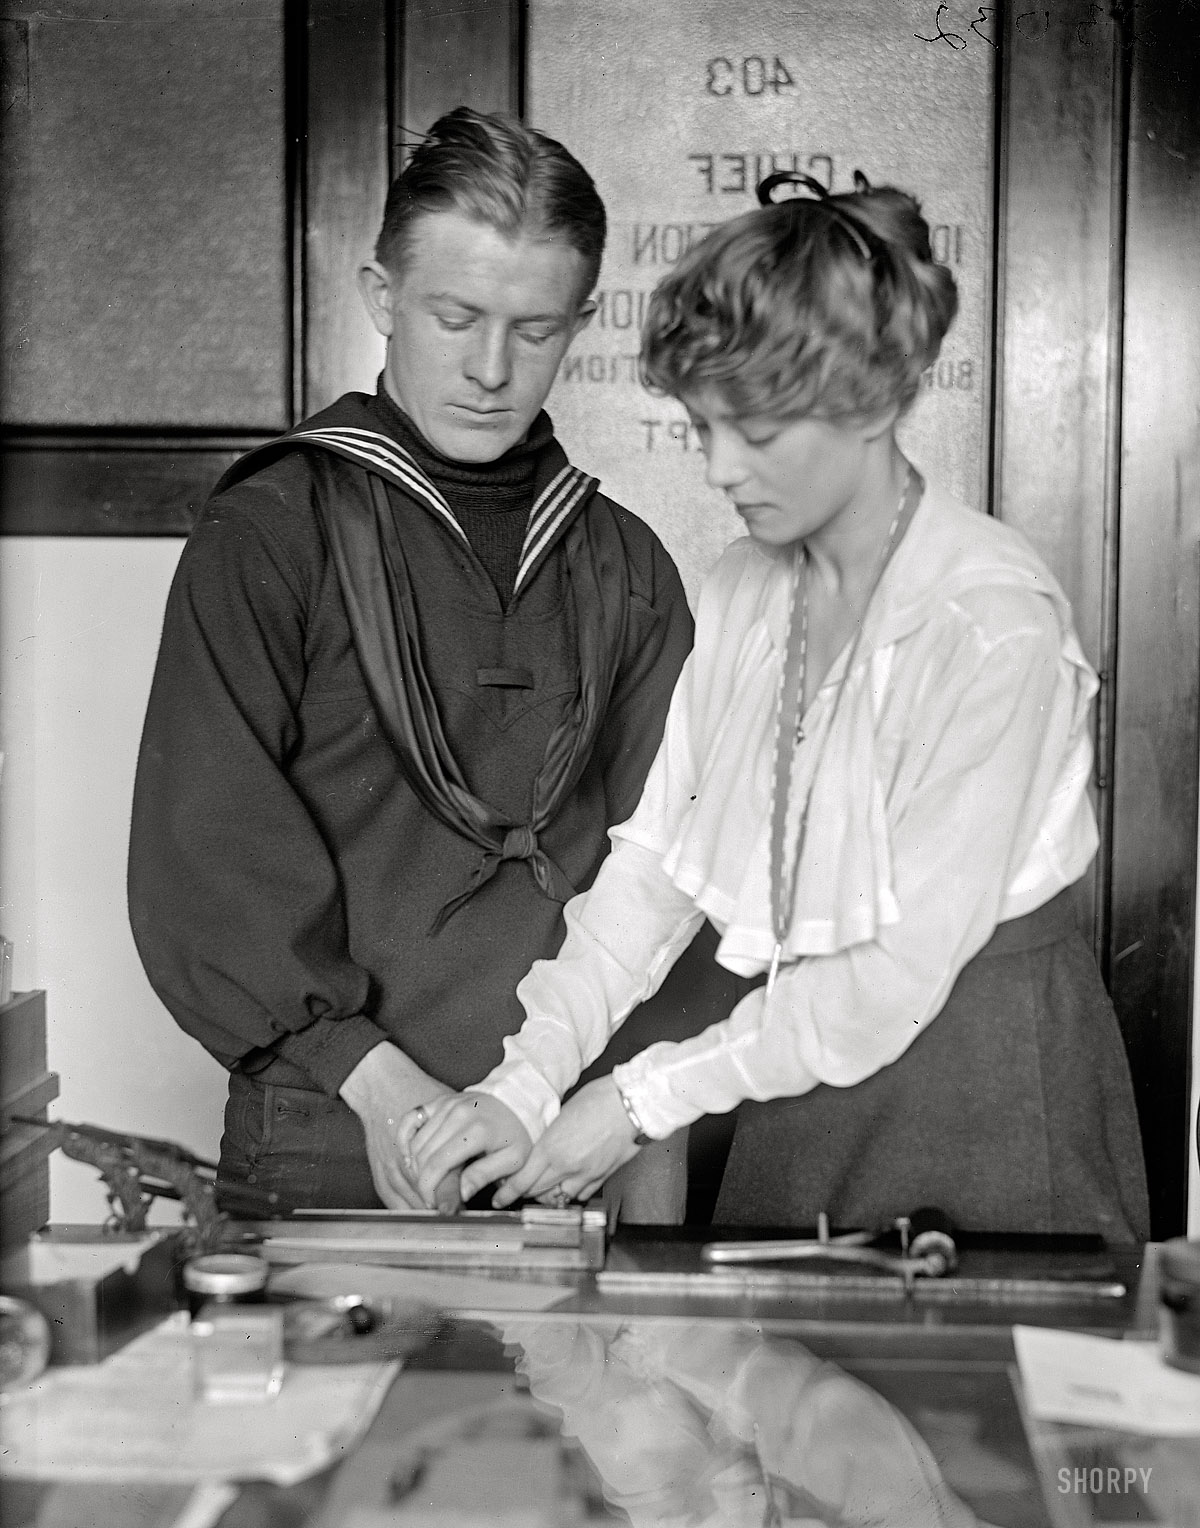 Washington, 1918. "U.S. Navy Intelligence Bureau. Fingerprint department clerks James A. Noonan, Mrs. G.G. Boswell." Harris & Ewing glass neg. View full size.